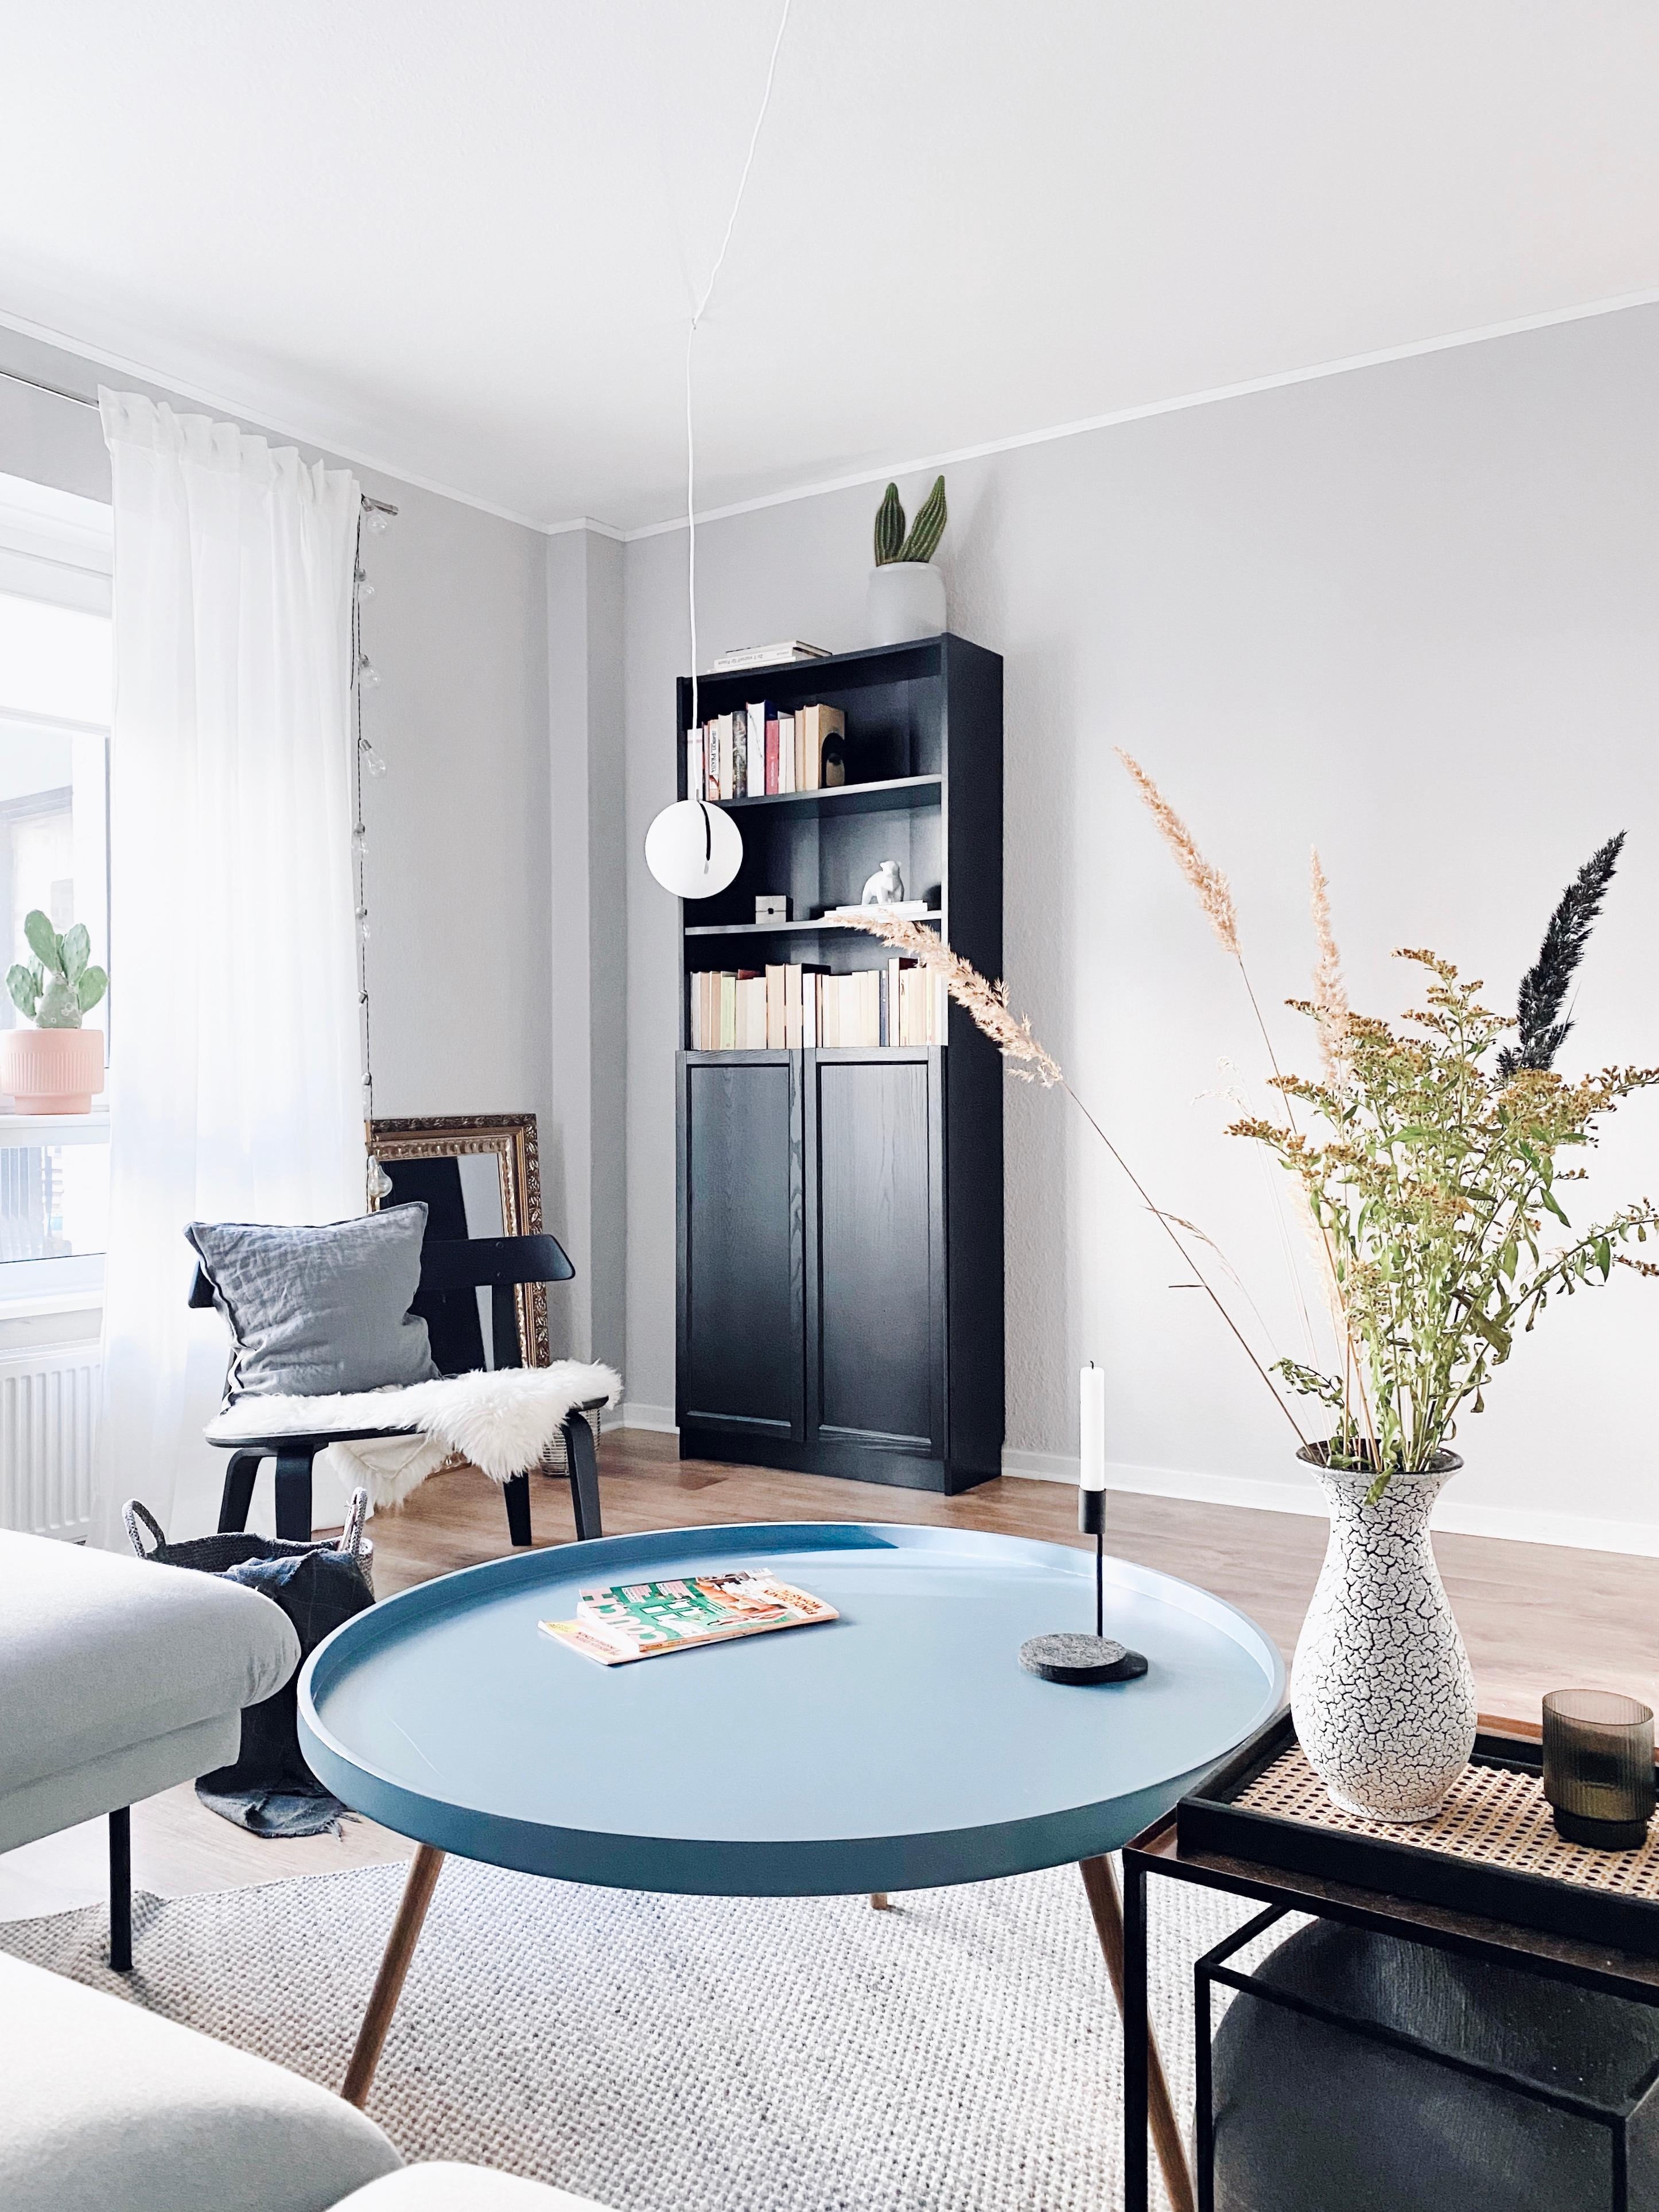 #livingroom #leseecke #hygge #interior #nordicroom #scandinavianliving #nordichome #greylover #greyinterior #minimalism